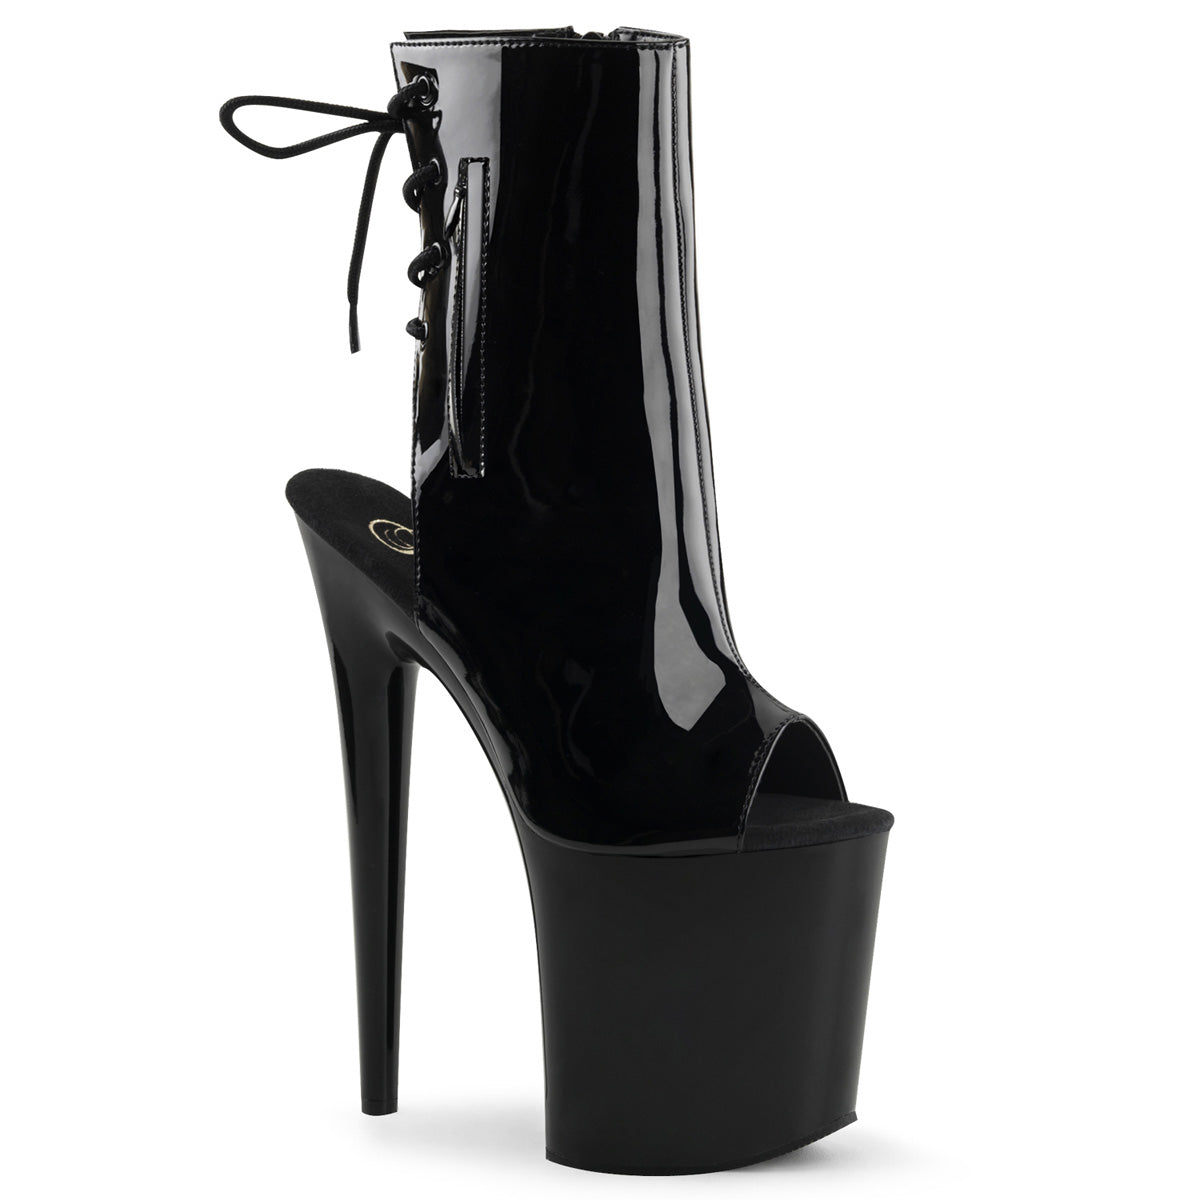 FLAMINGO-1018 8" Heel Black Patent  Stripper Platforms High Heels